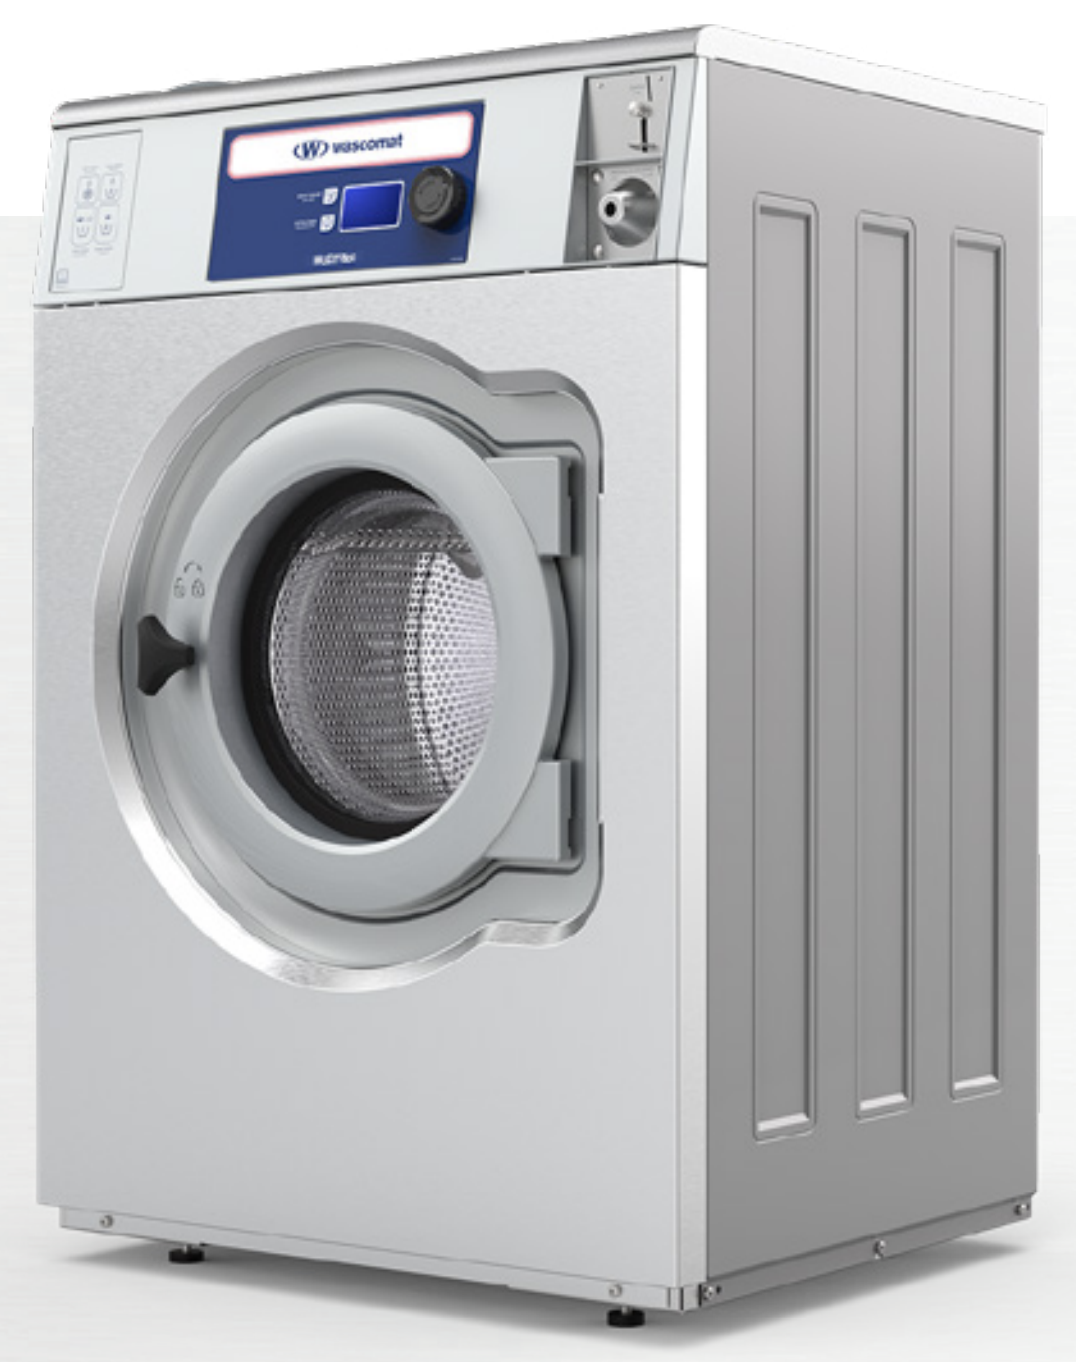 New 2022 Wascomat Wud730 - Cardinal Laundry Equipment Co